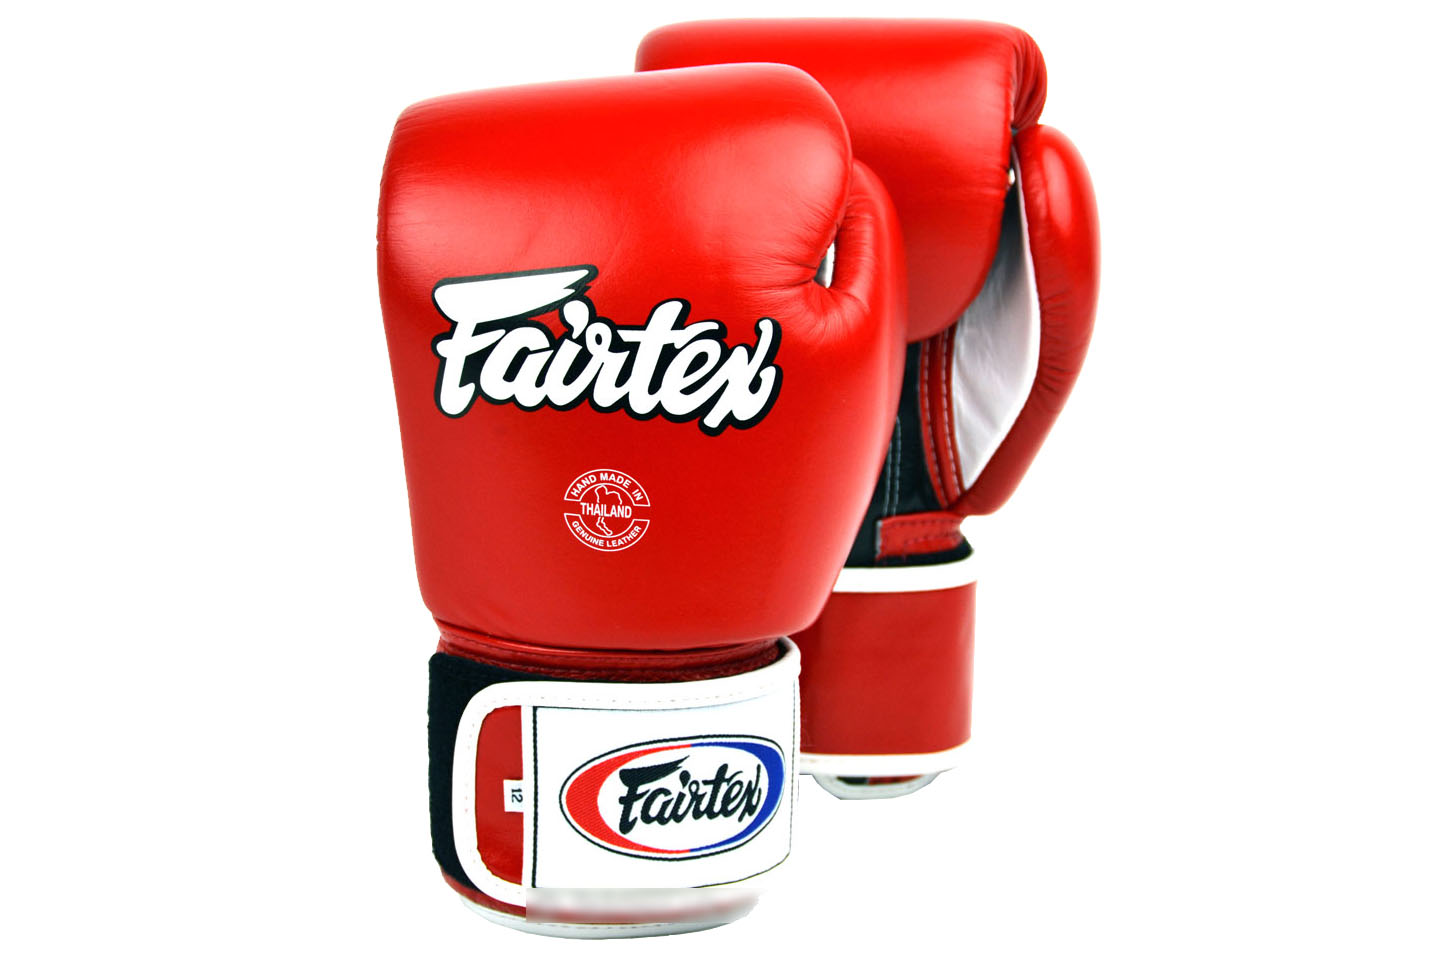 Gants de boxe d'entraînement Fairtex Fantasy 100% cuir - Fairtex